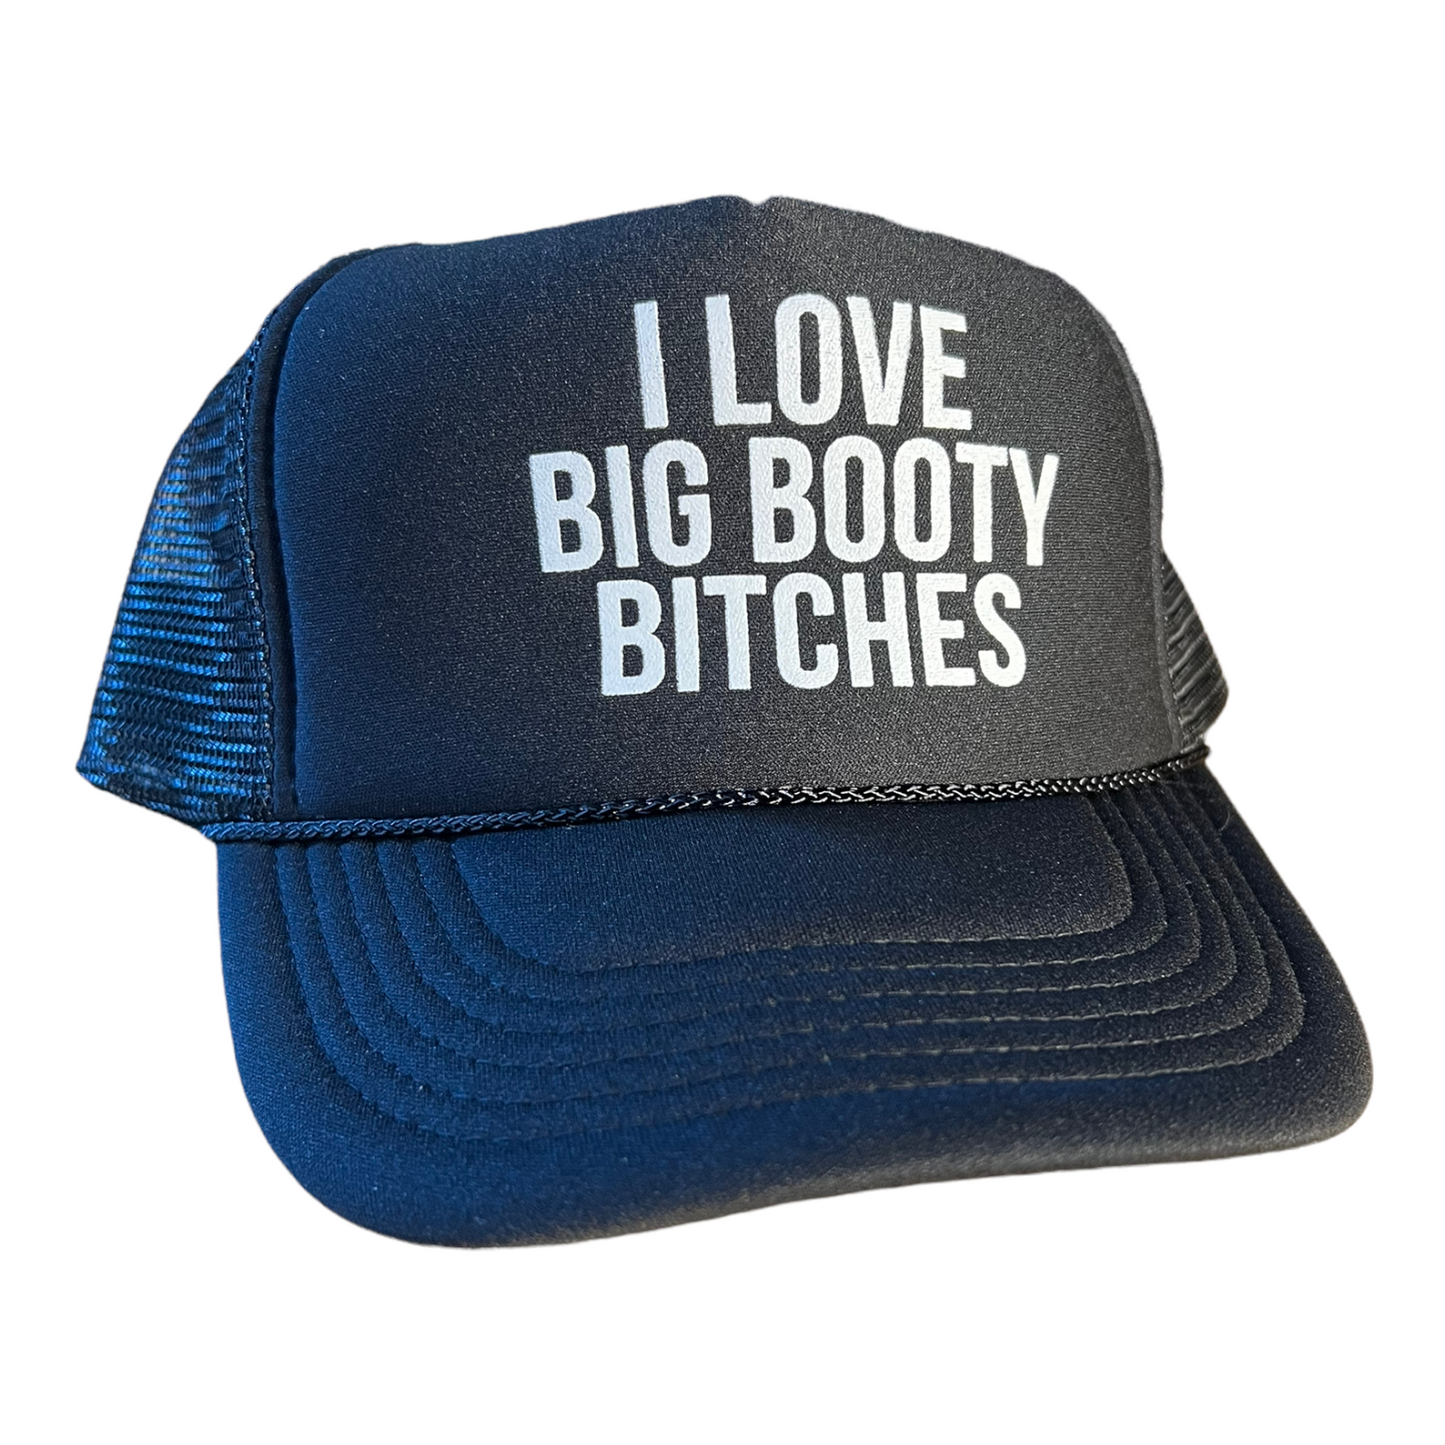 I love big booty bitches Trucker Hat Funny Trucker Hat Black